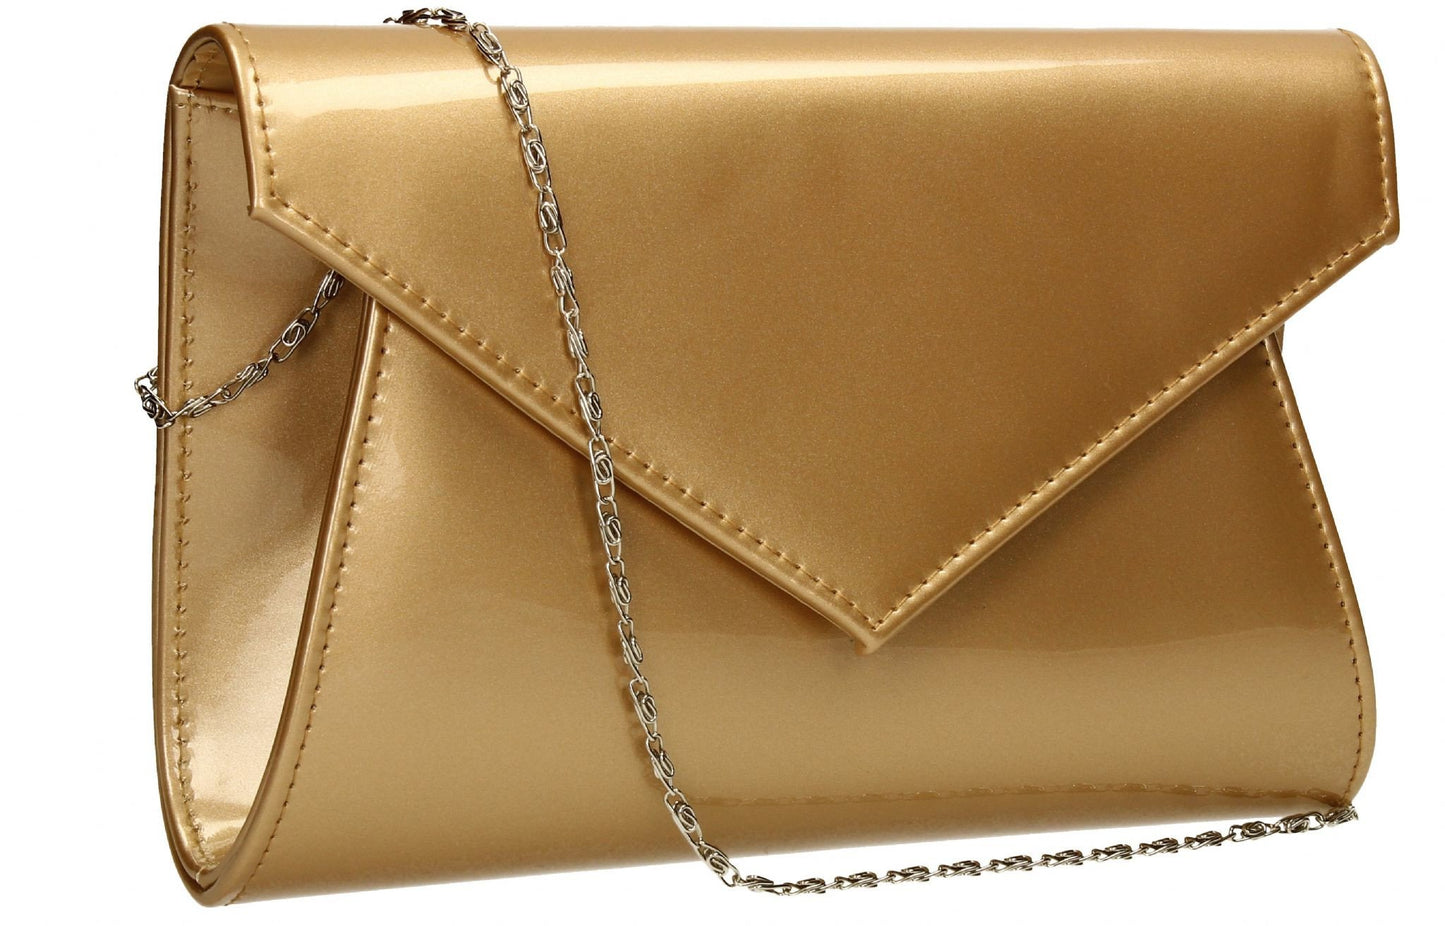 SWANKYSWANS Chrissy Envelope Clutch Bag Gold Cute Cheap Clutch Bag For Weddings School and Work